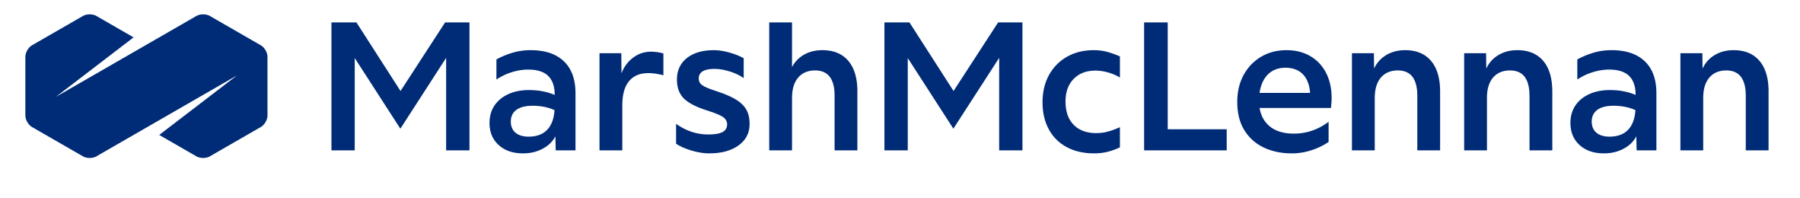 Marsh McLennan Logo Blue